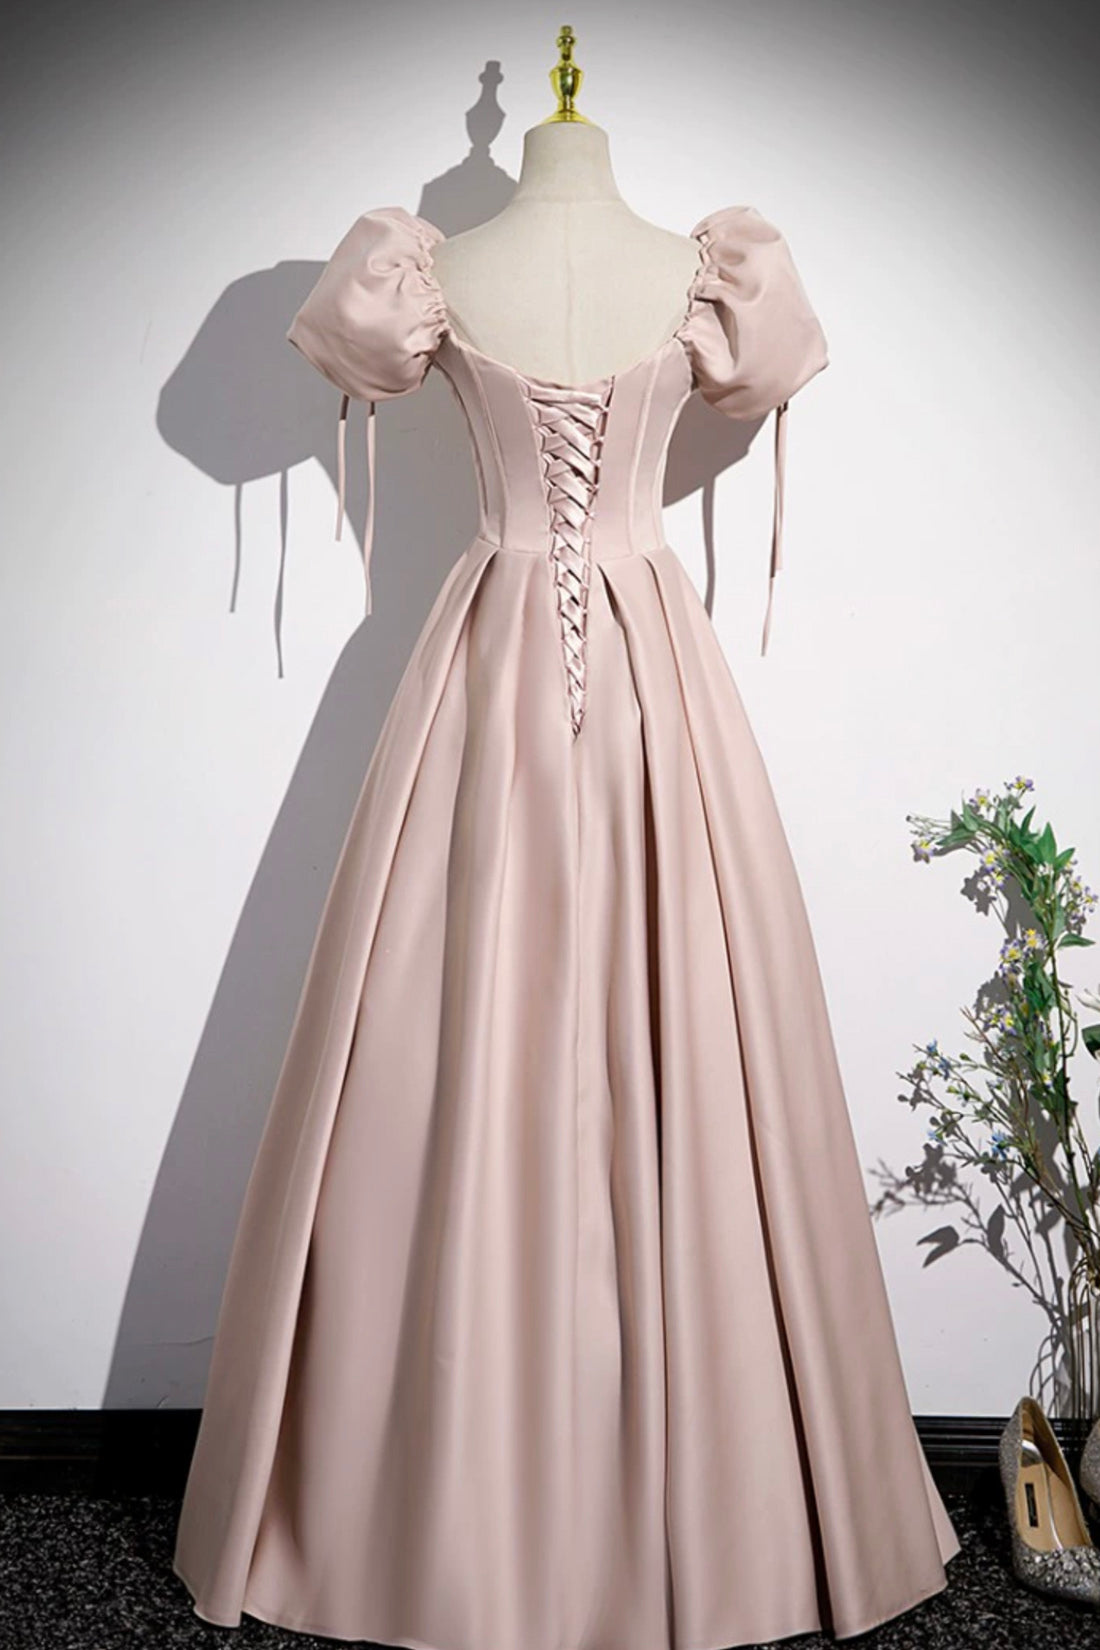 pink corset dress